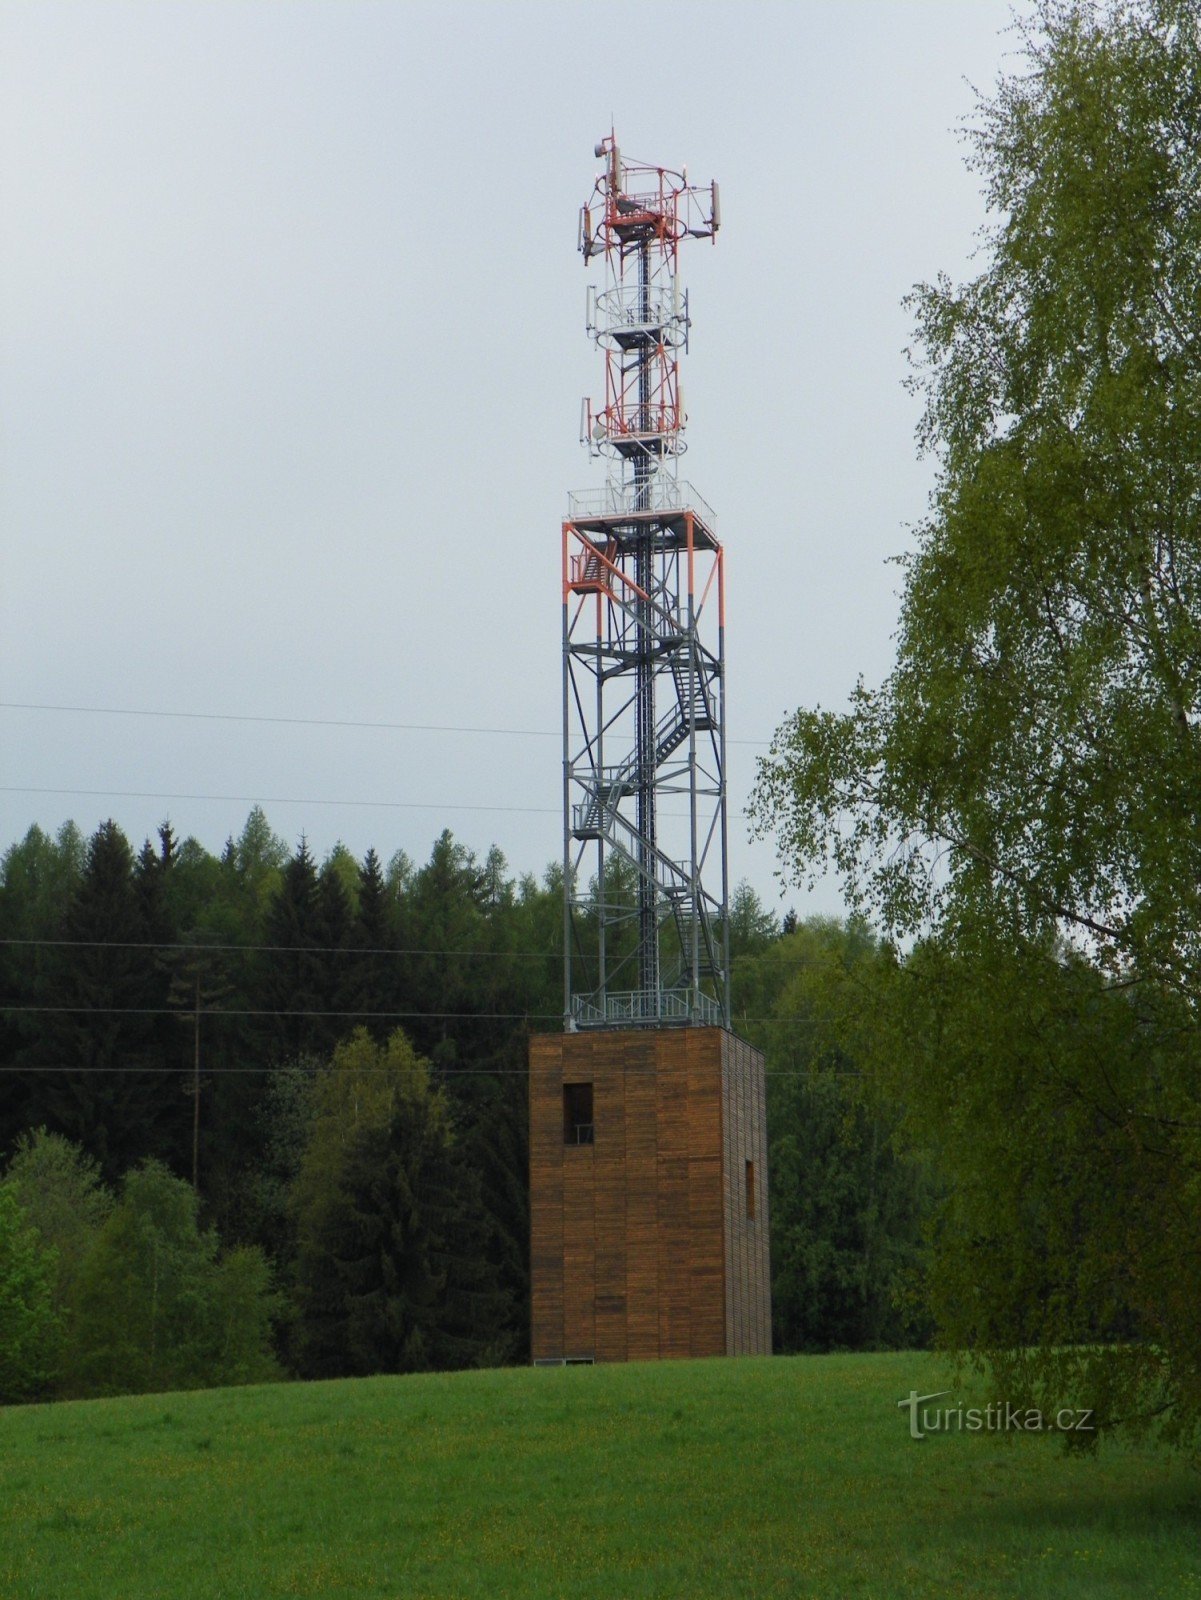 Lookout tower on Zuberské hill